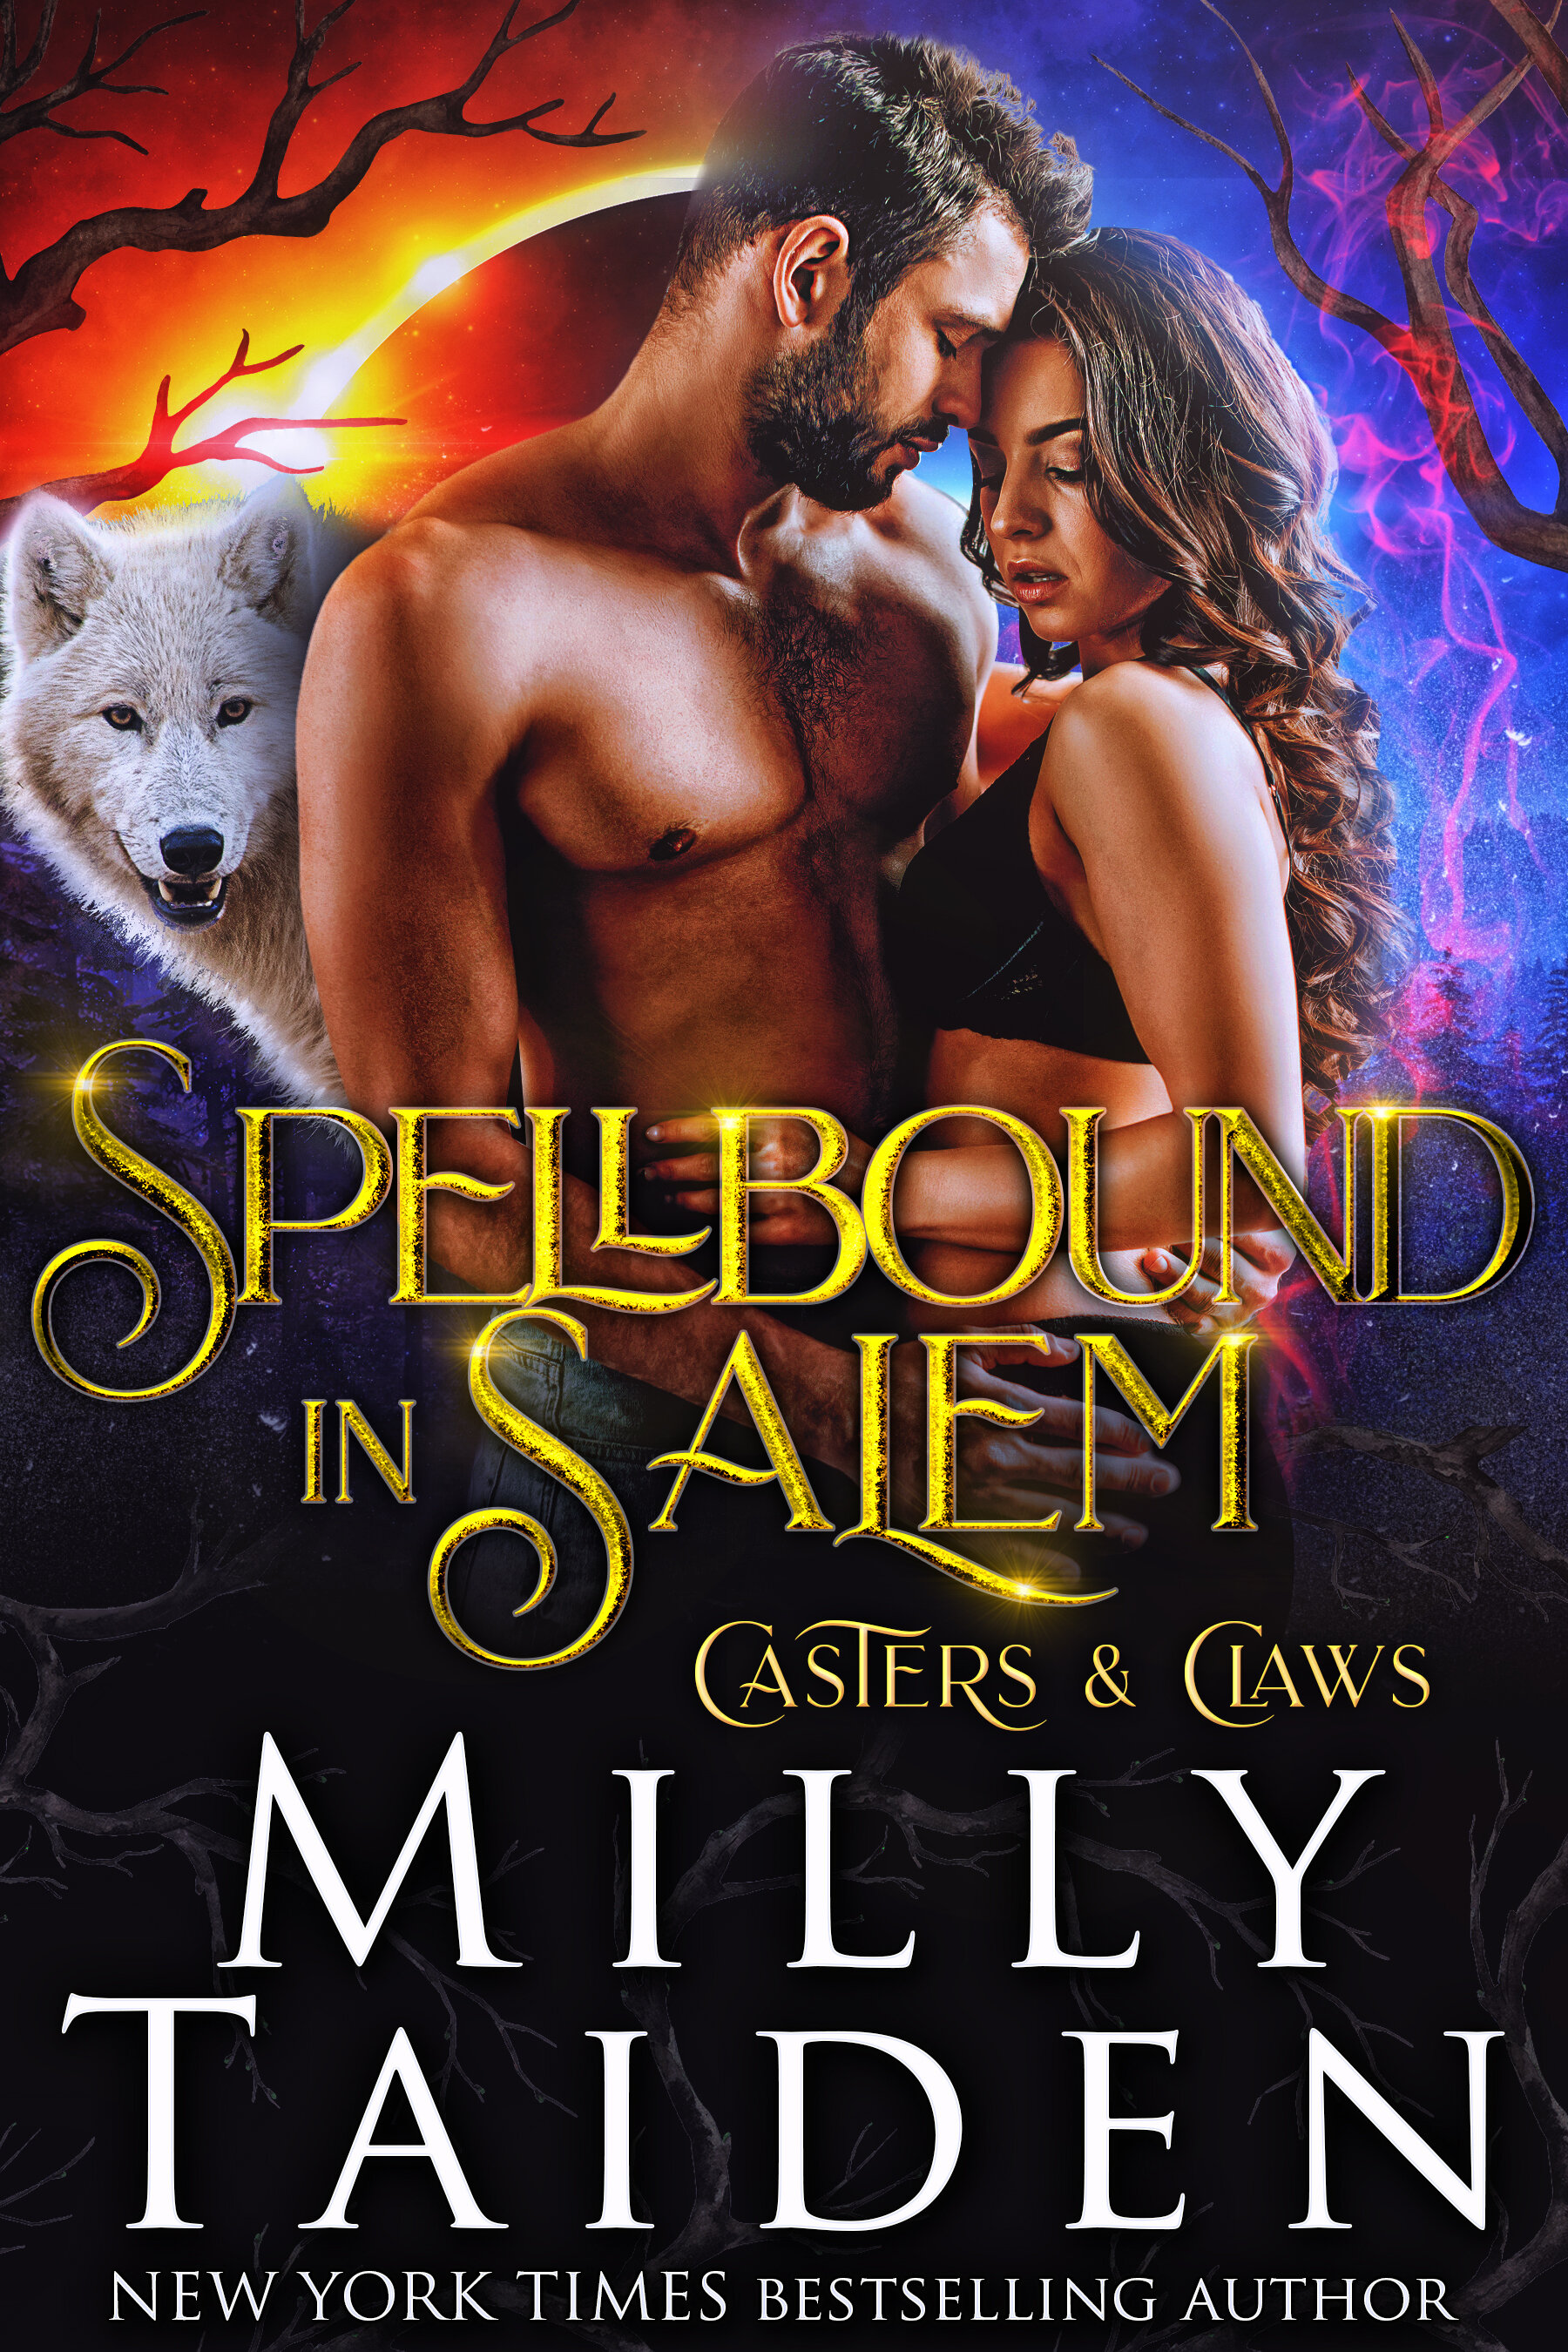 Milly Taiden - Casters & Claws - Spellbound in Salem.jpg